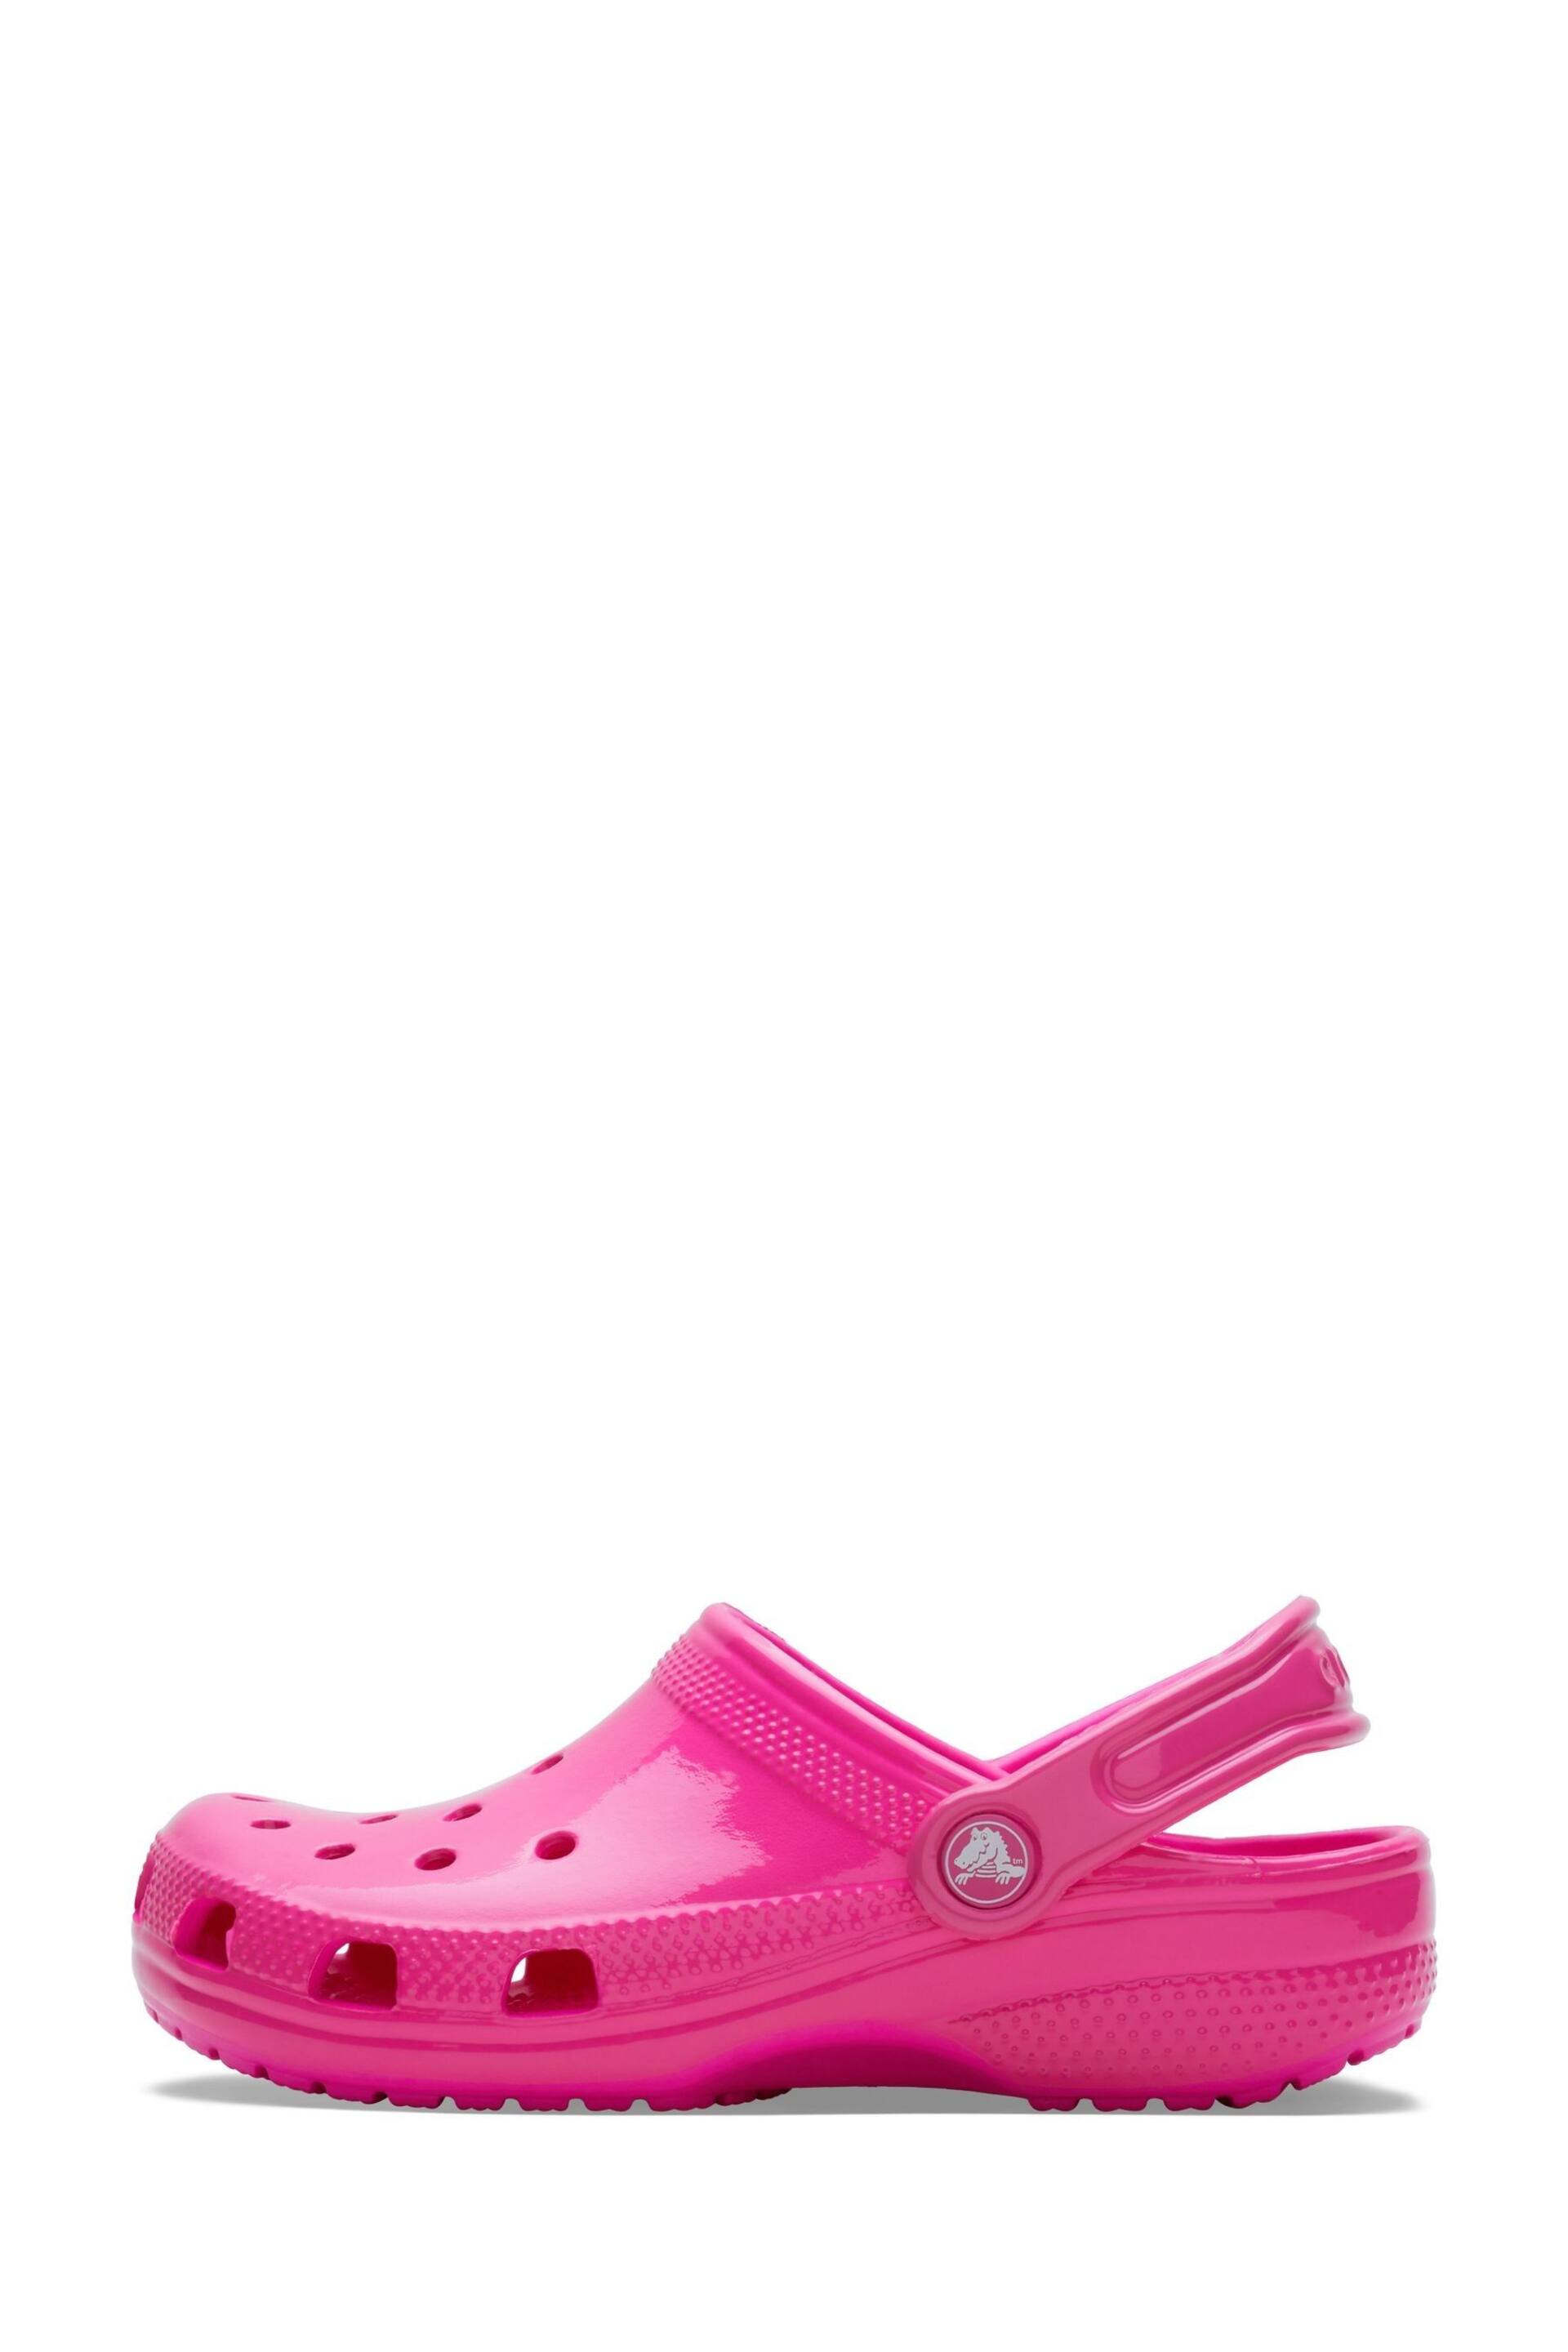 Crocs Classic Neon Toddler Clog - Image 4 of 7